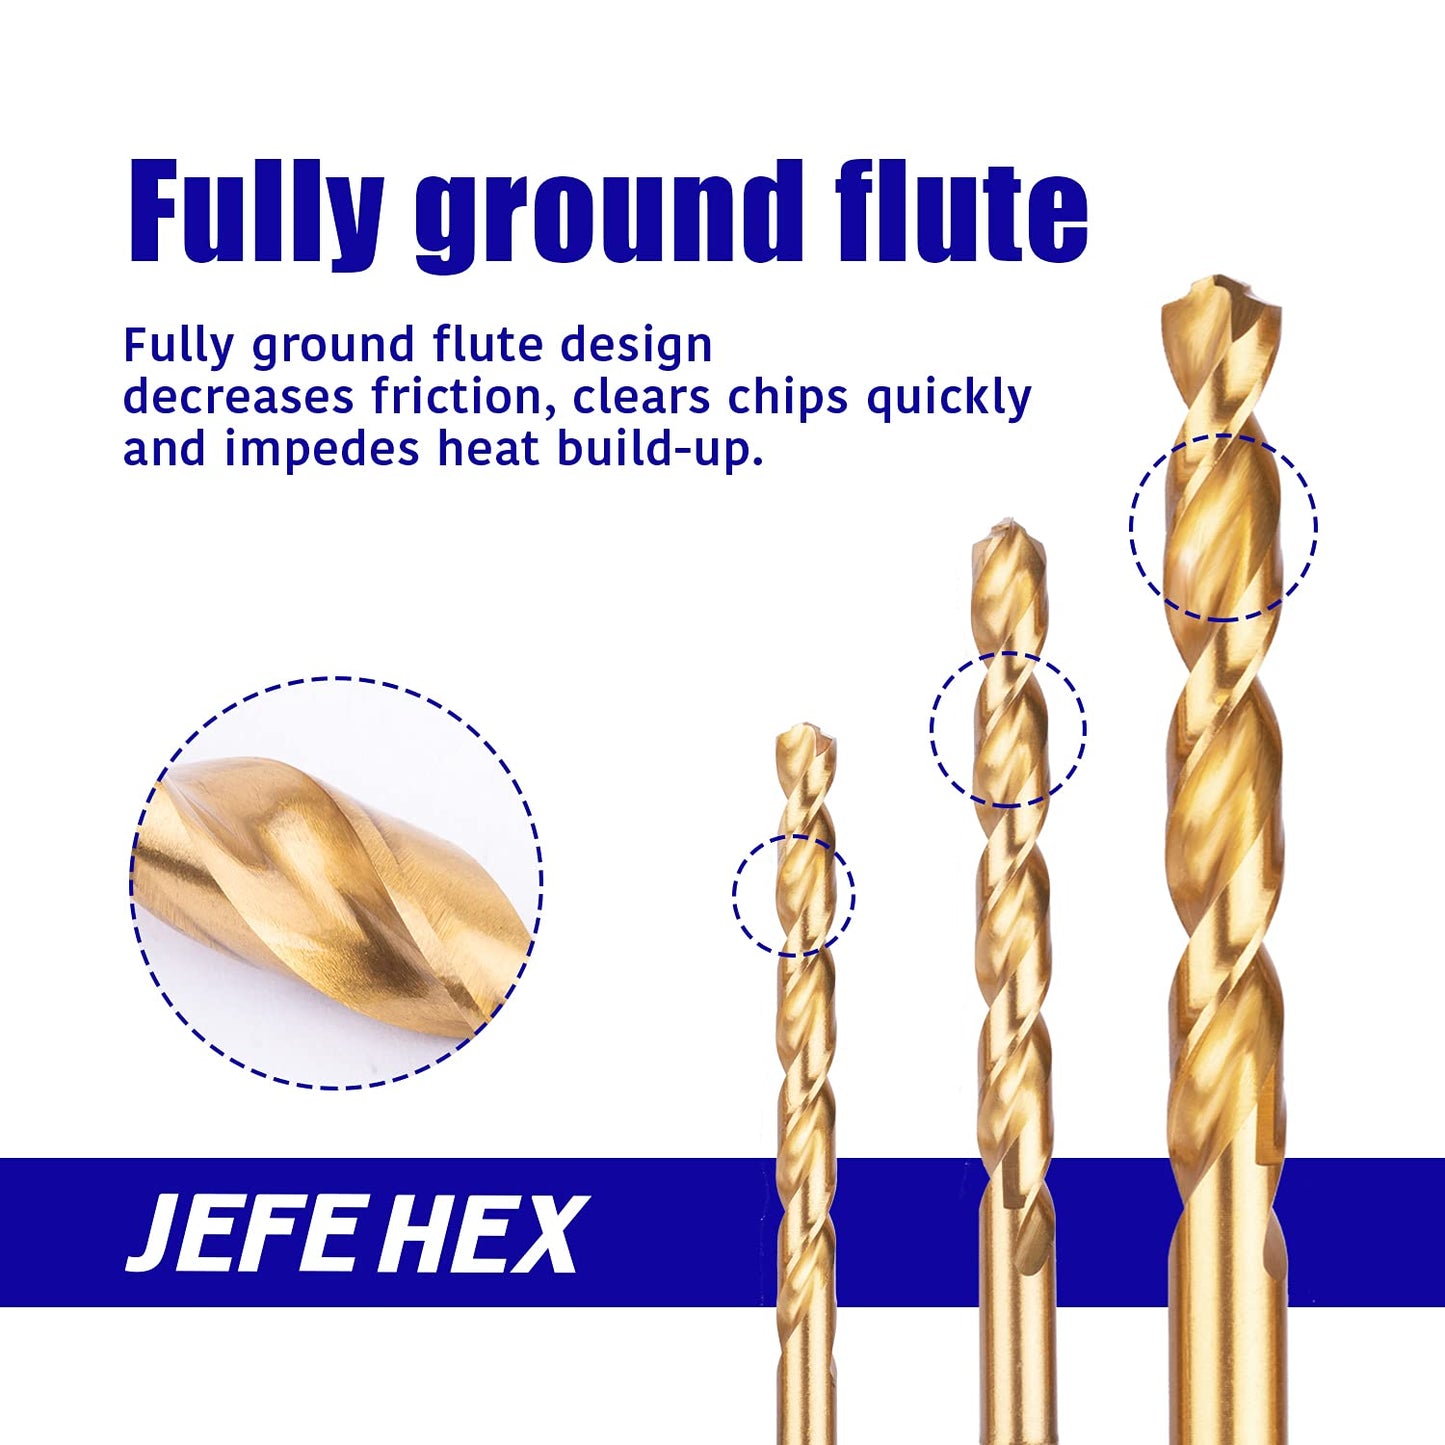 JEFE HEX 1/4" HSS Twist Titanium Hex Shank Drill Bits, 135 Degree Easy Cut Split Point (Pack of 2).